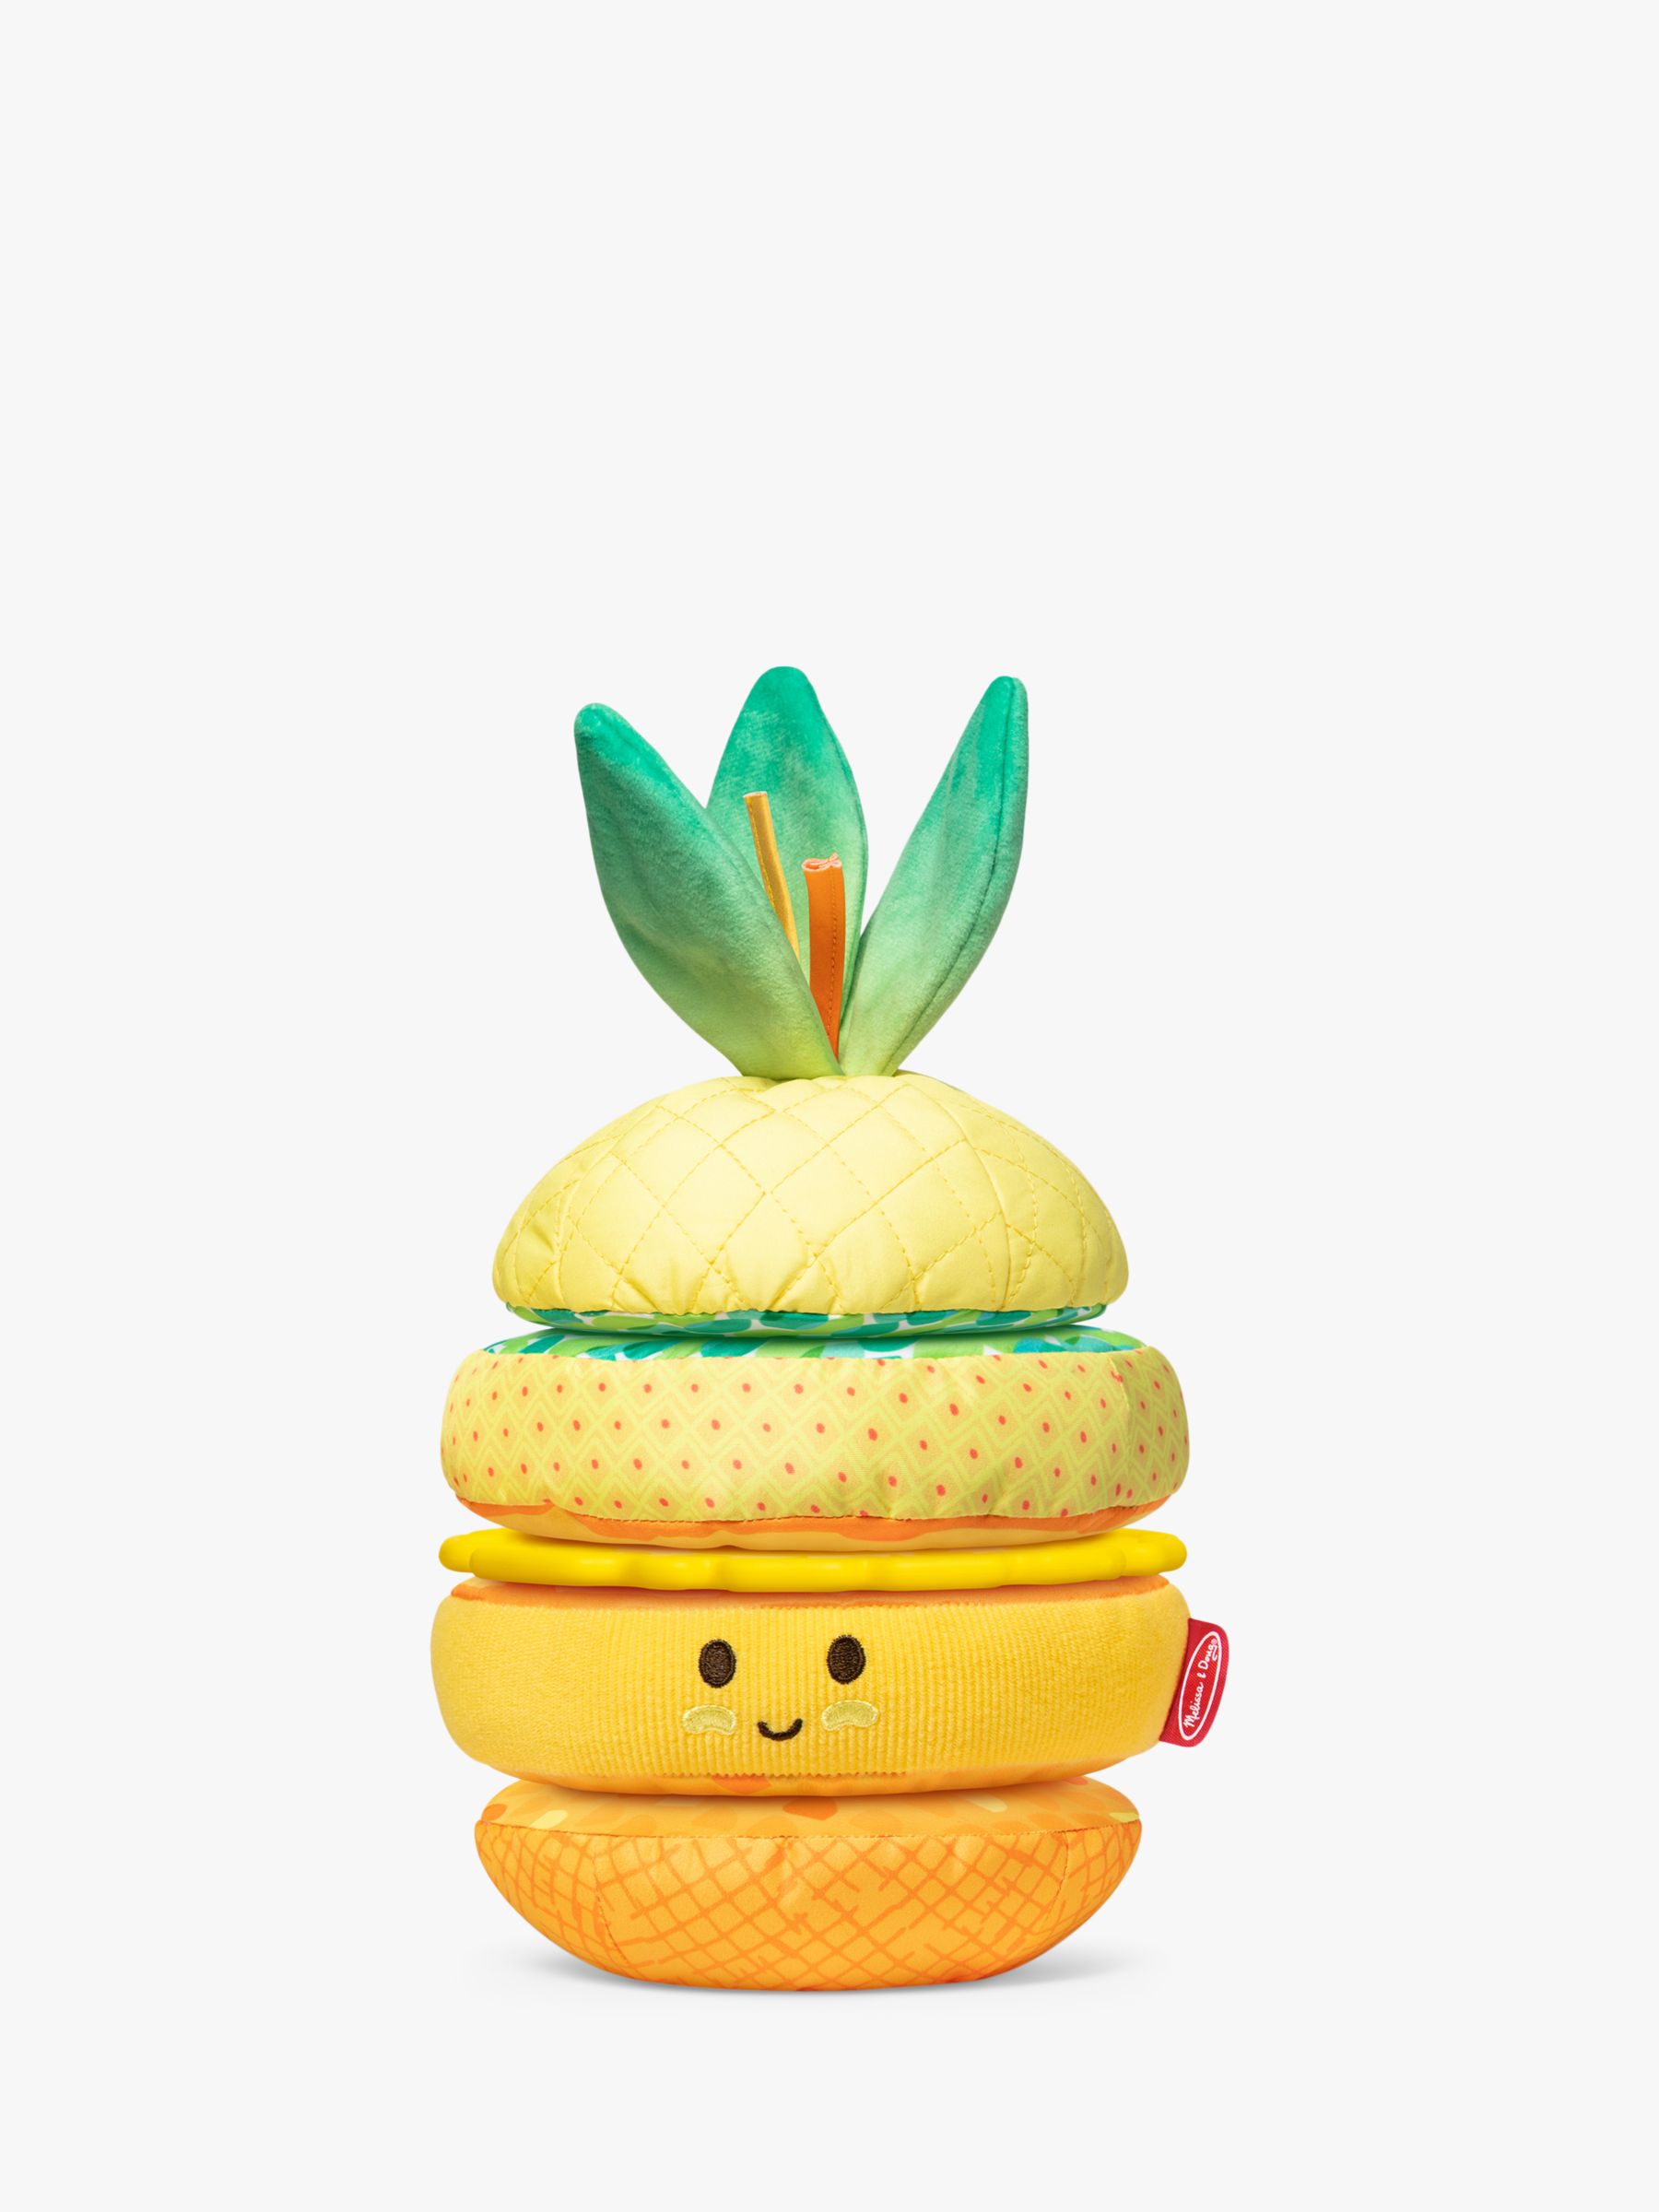 Melissa & Doug Baby Multi- Sensory Soft Pineapple Stacker Toy